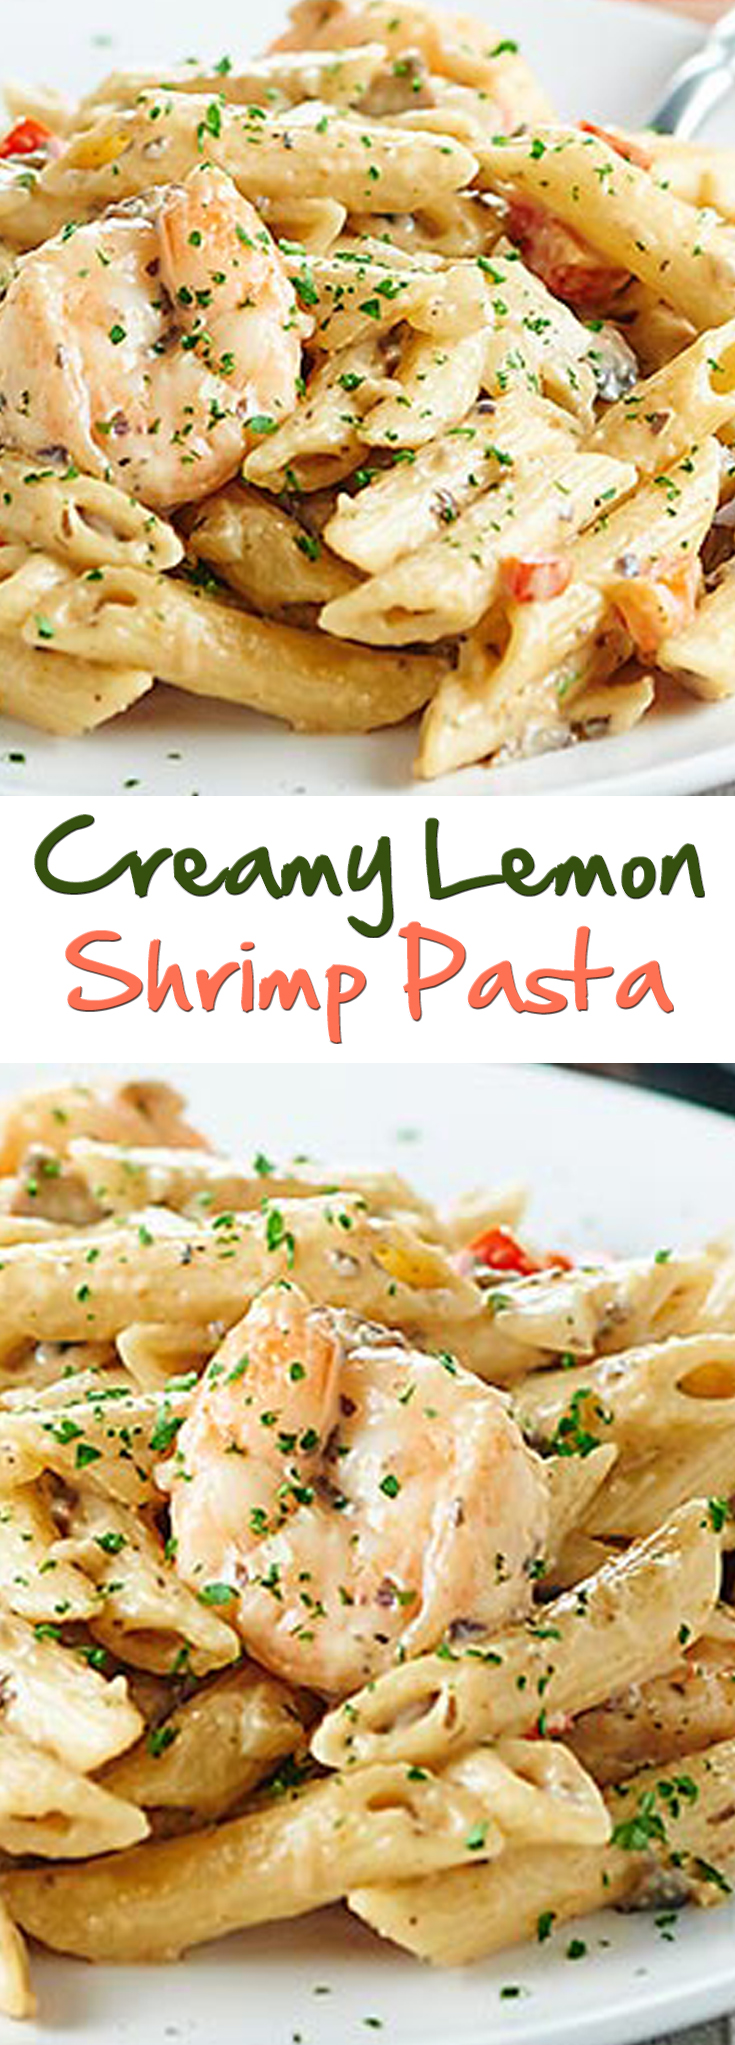 Creamy Lemon Shrimp Pasta